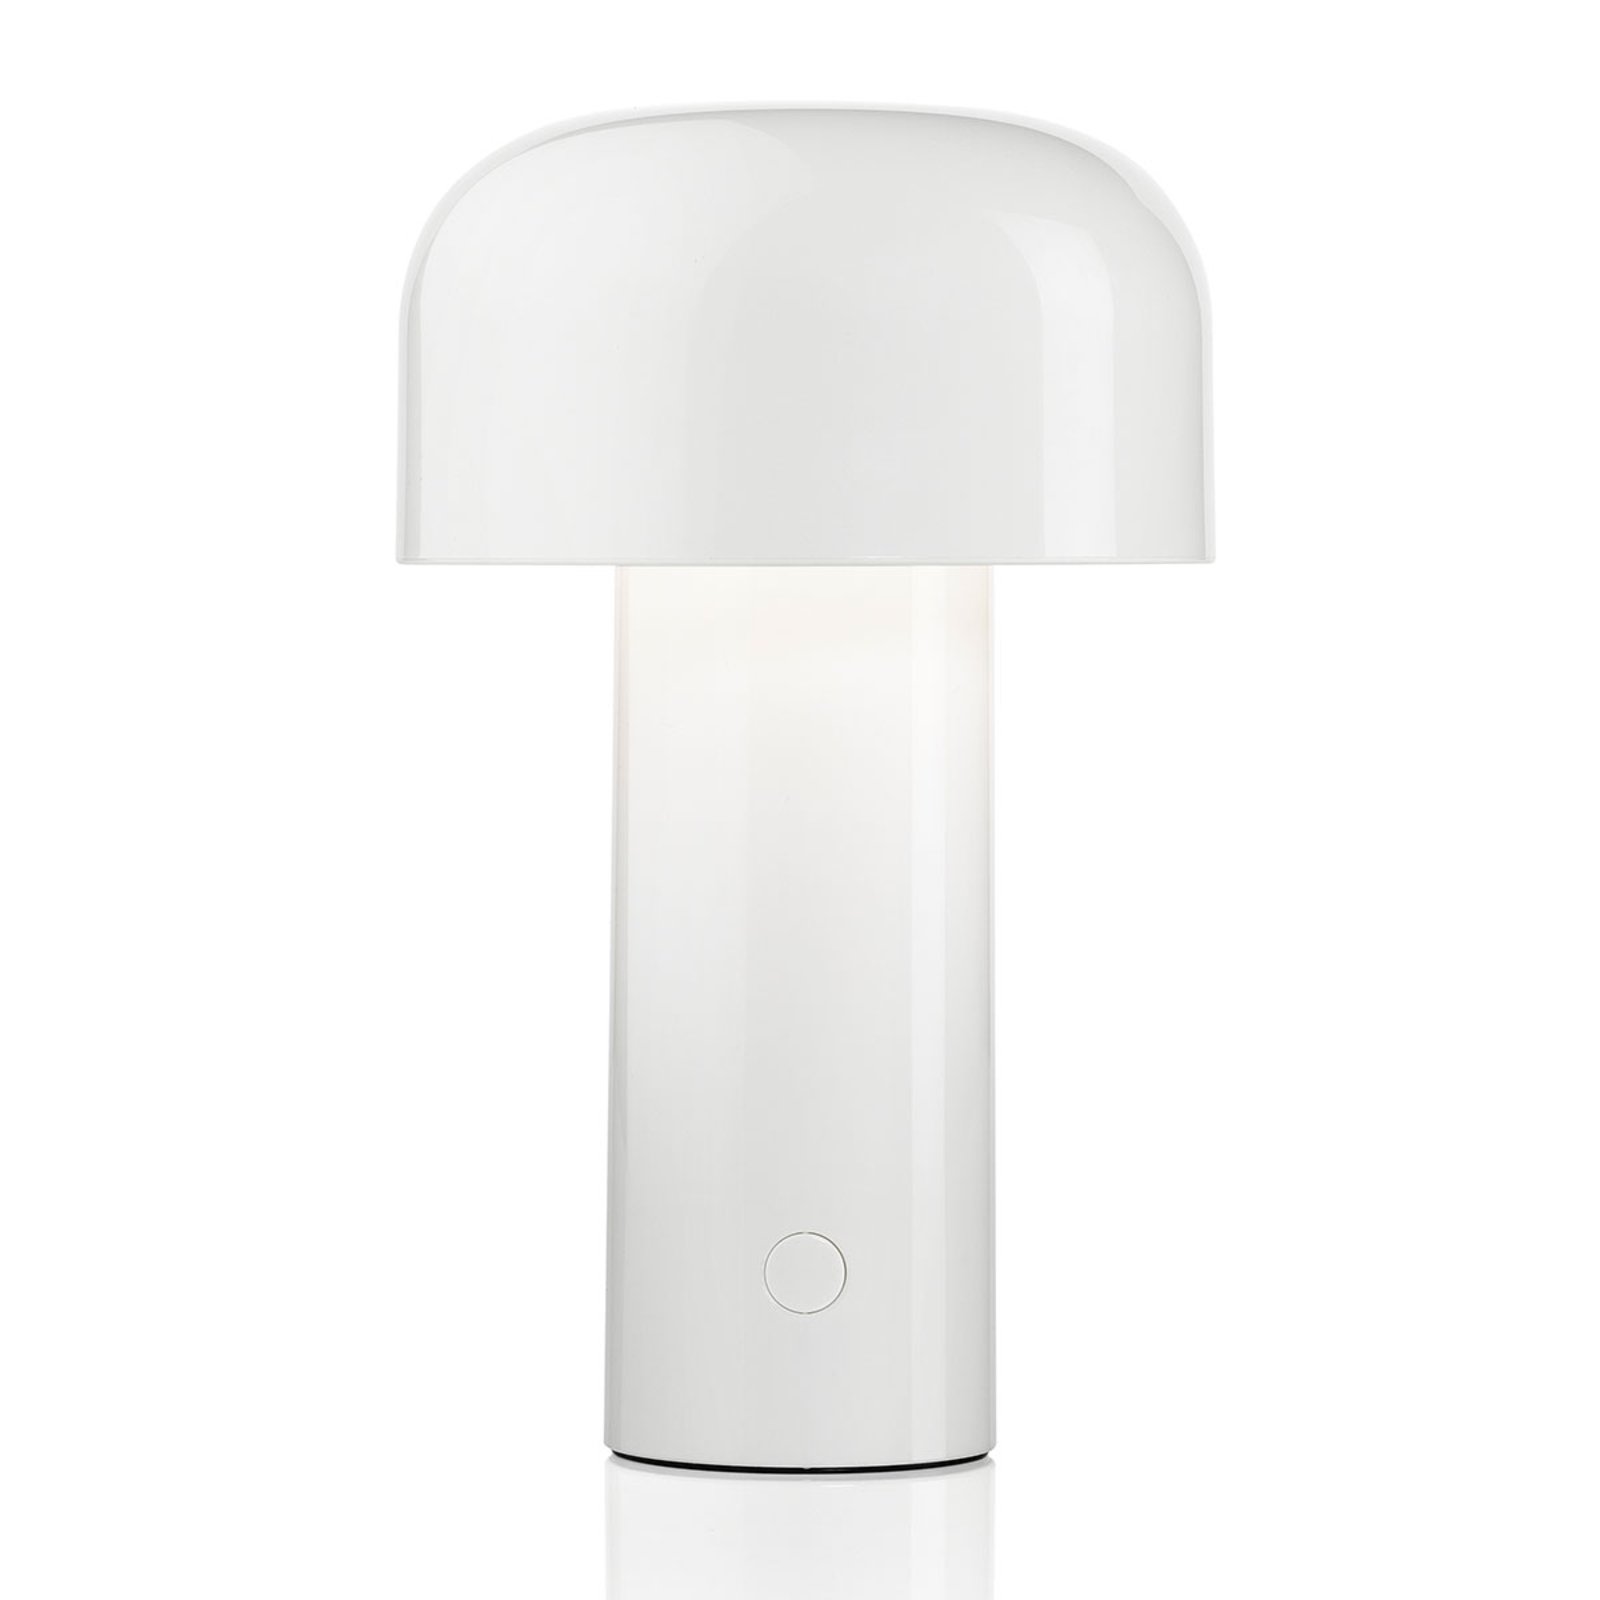 FLOS Bellhop rechargeable LED table lamp white